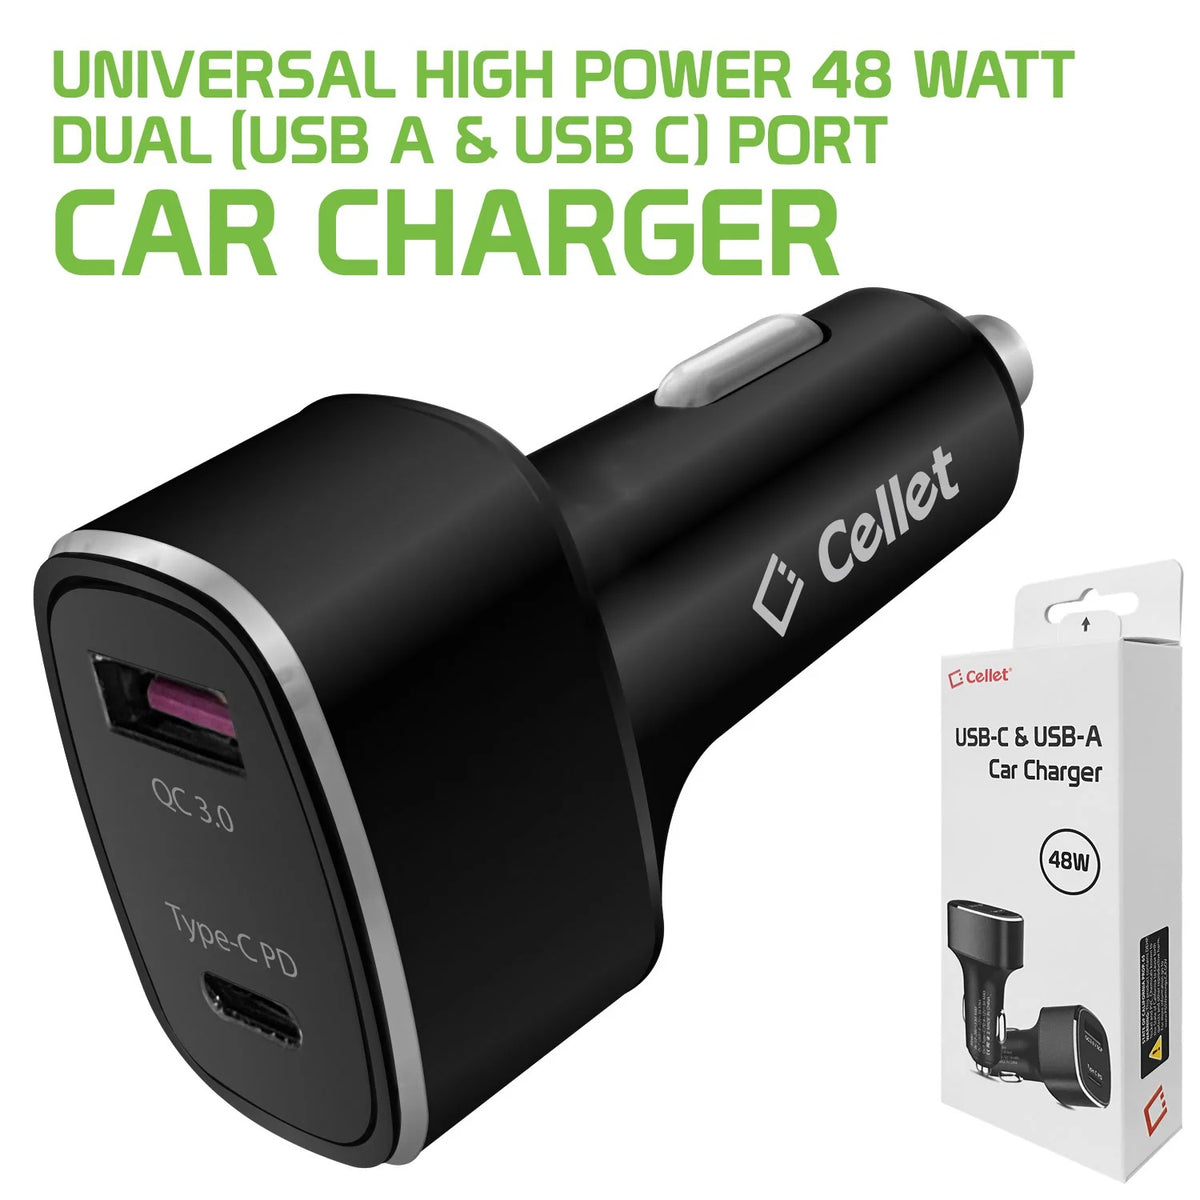 Cellet Dual USB Car Charger, Universal High Power 48 Watt Dual (USB A & USB C), Black